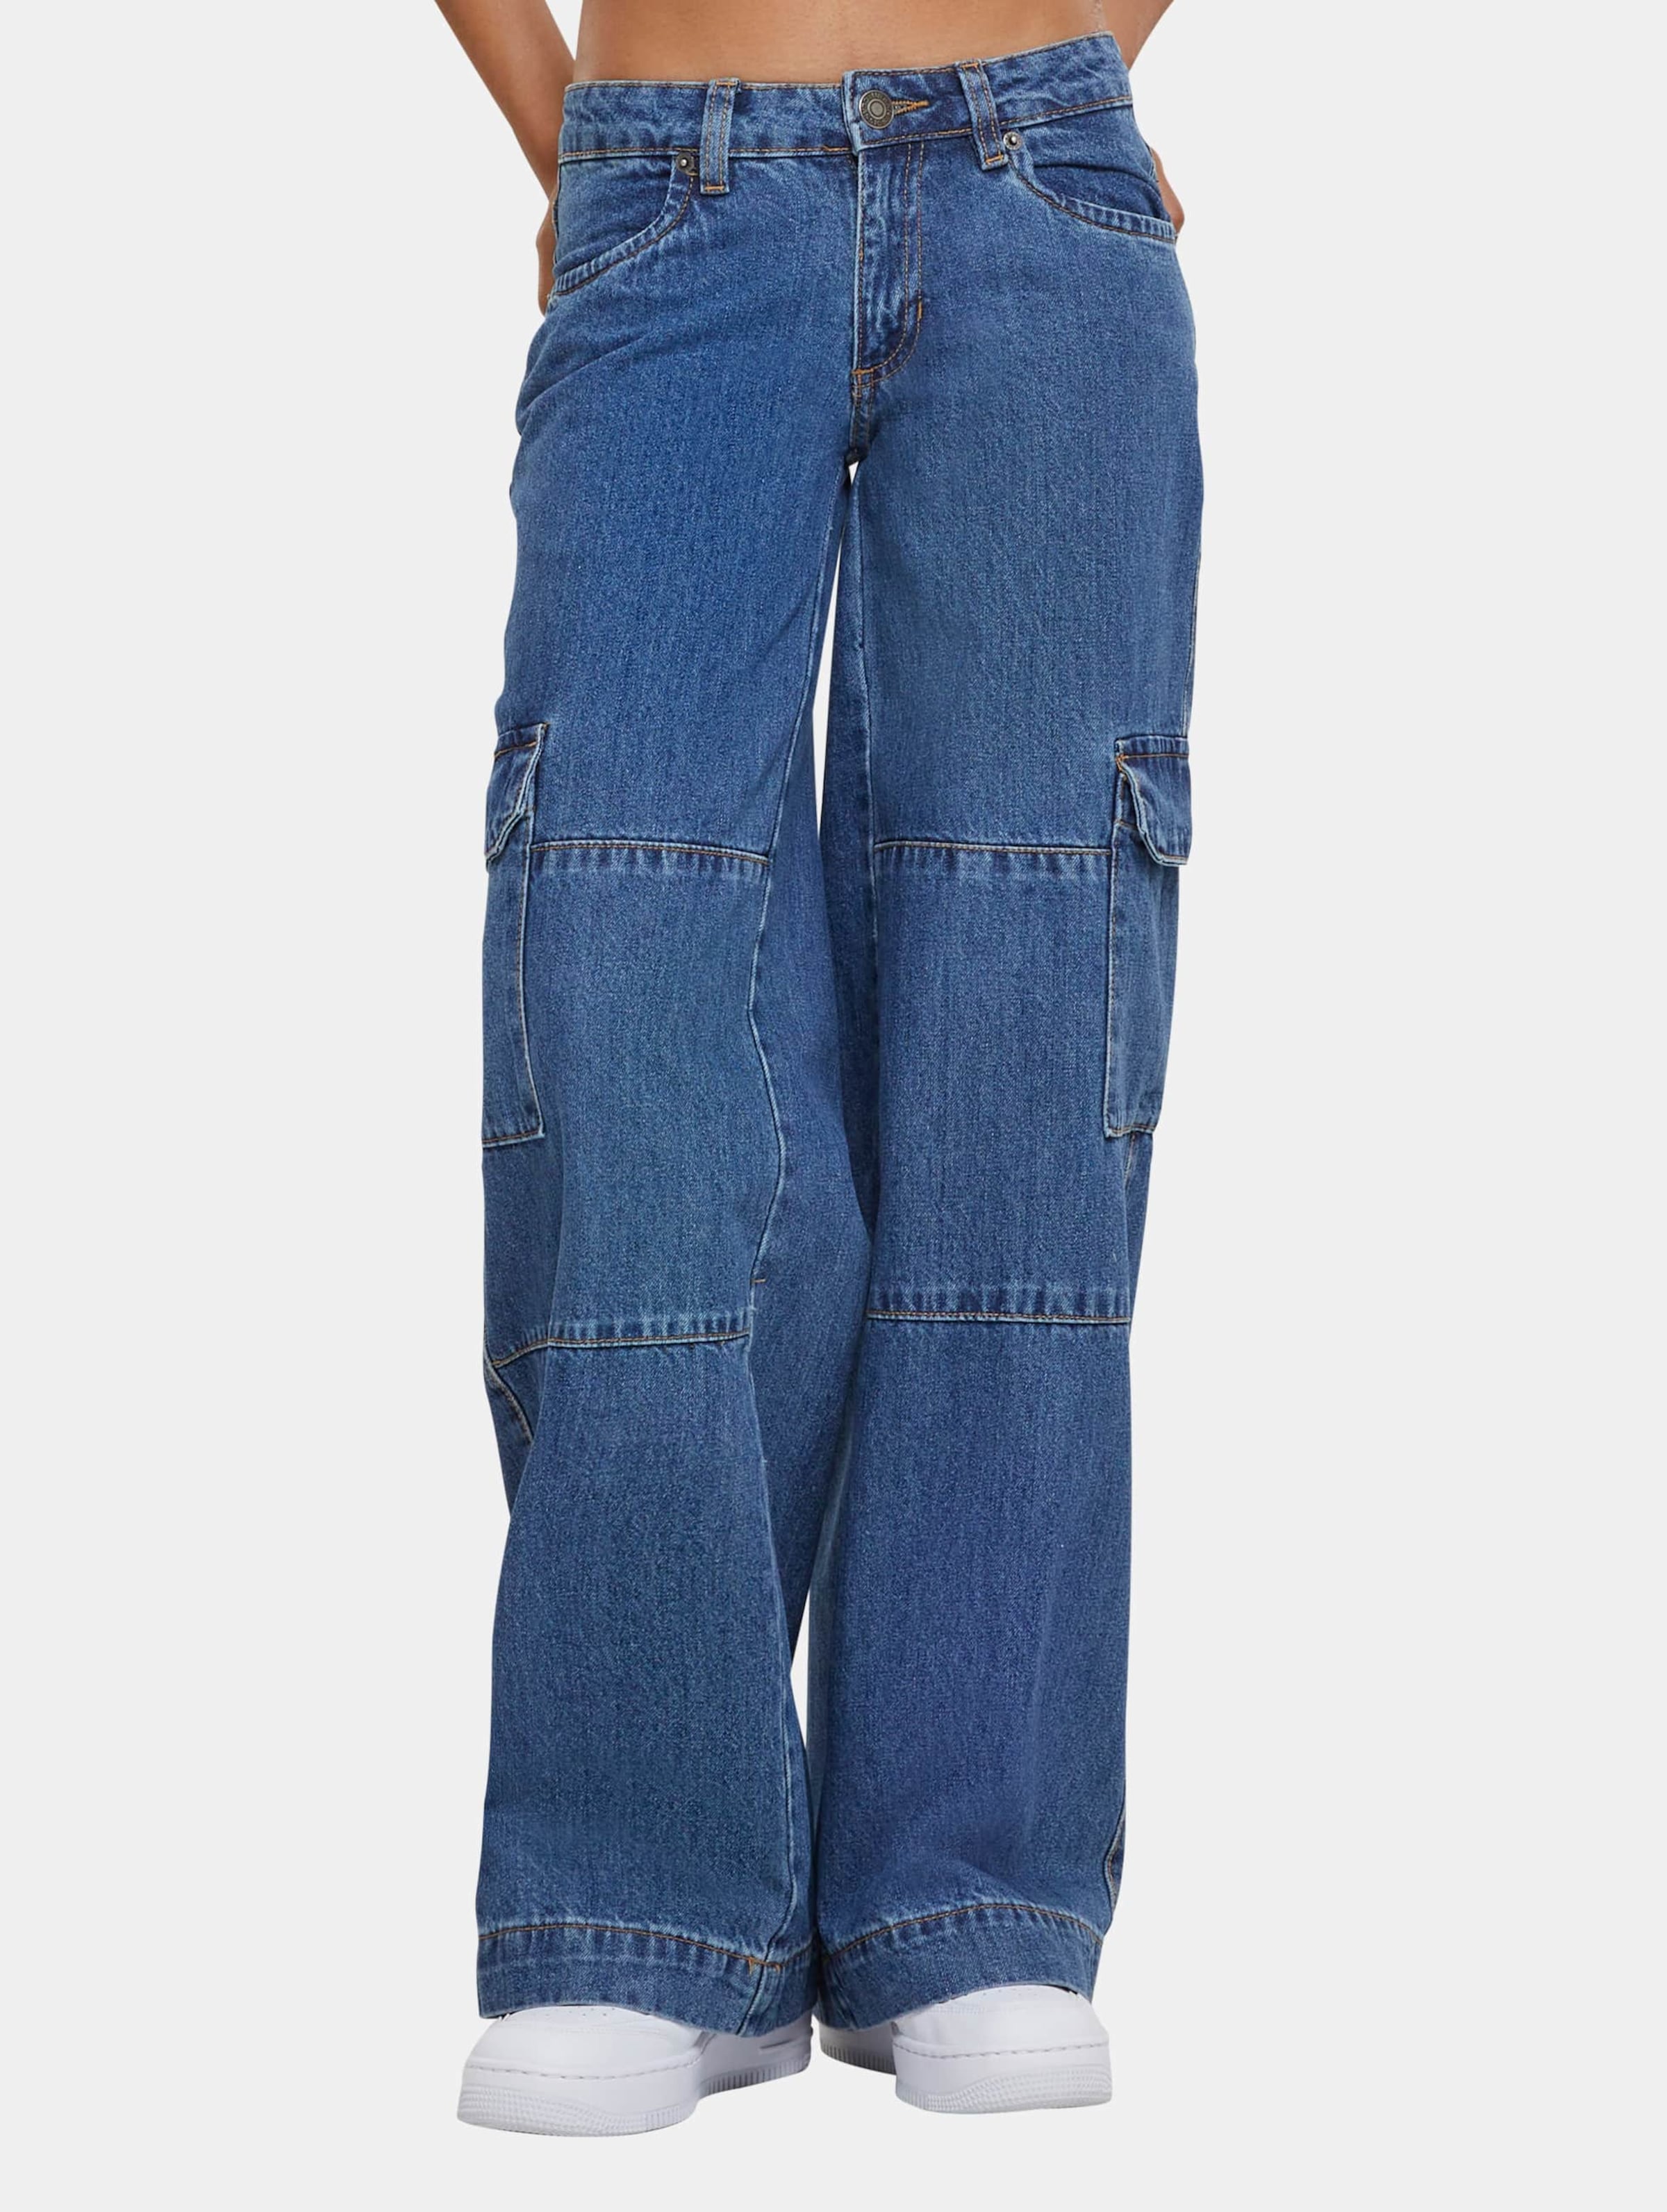 Urban Classics - Low Waist Denim Cargo trousers - Taille, 29 inch - Donkerblauw